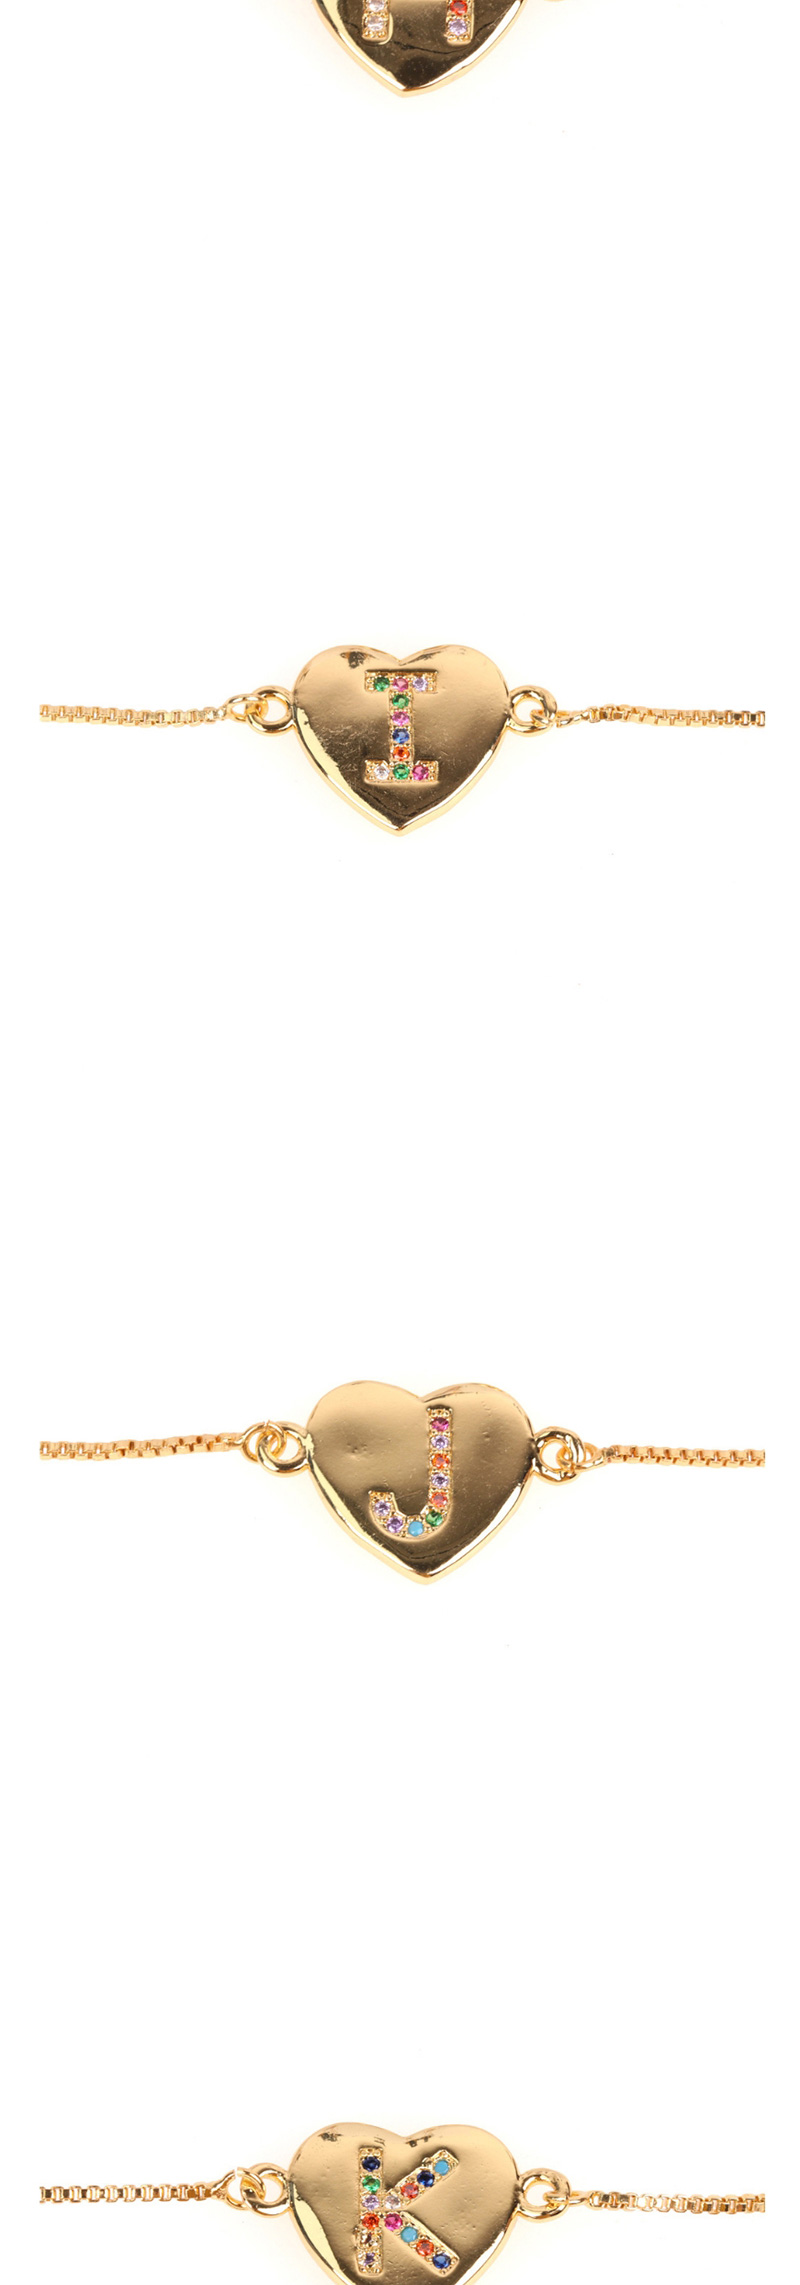 Fashion R Golden Heart Bracelet With Diamonds And Letters,Bracelets